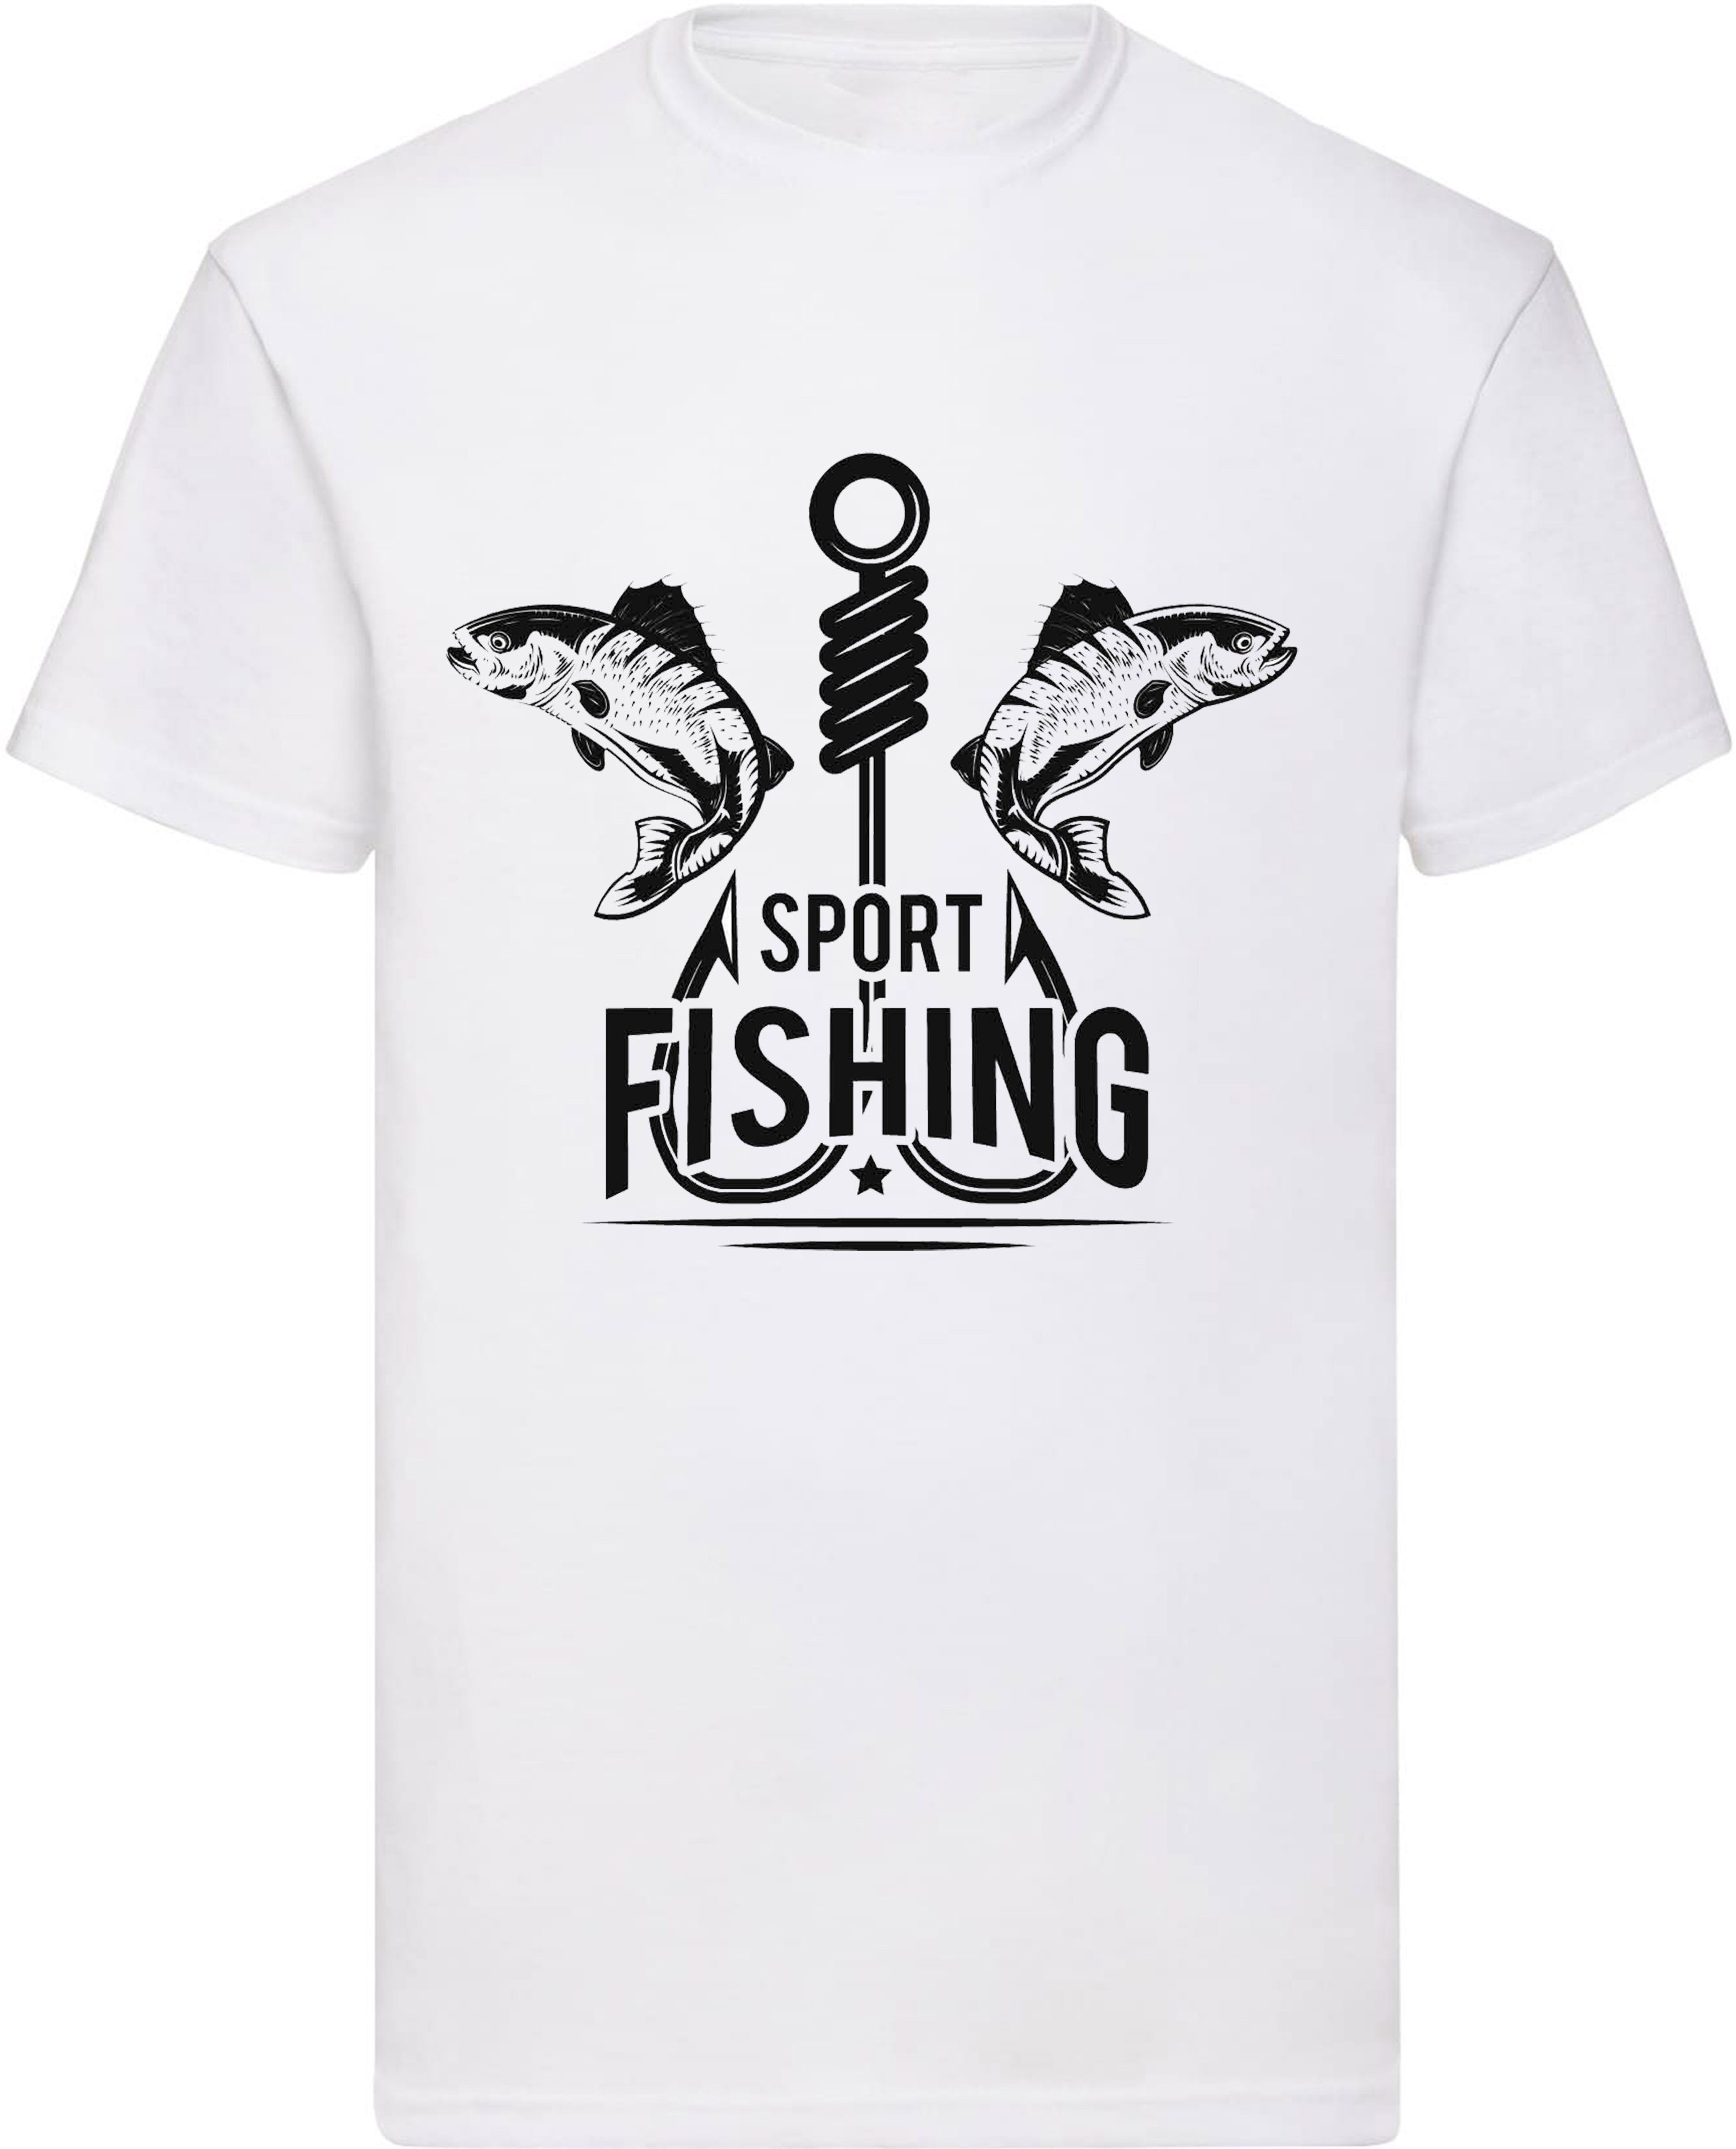 Freizeit T-Shirt Banco Sport Baumwolle Outfit Angeln 100% Fishing Sport Sommer